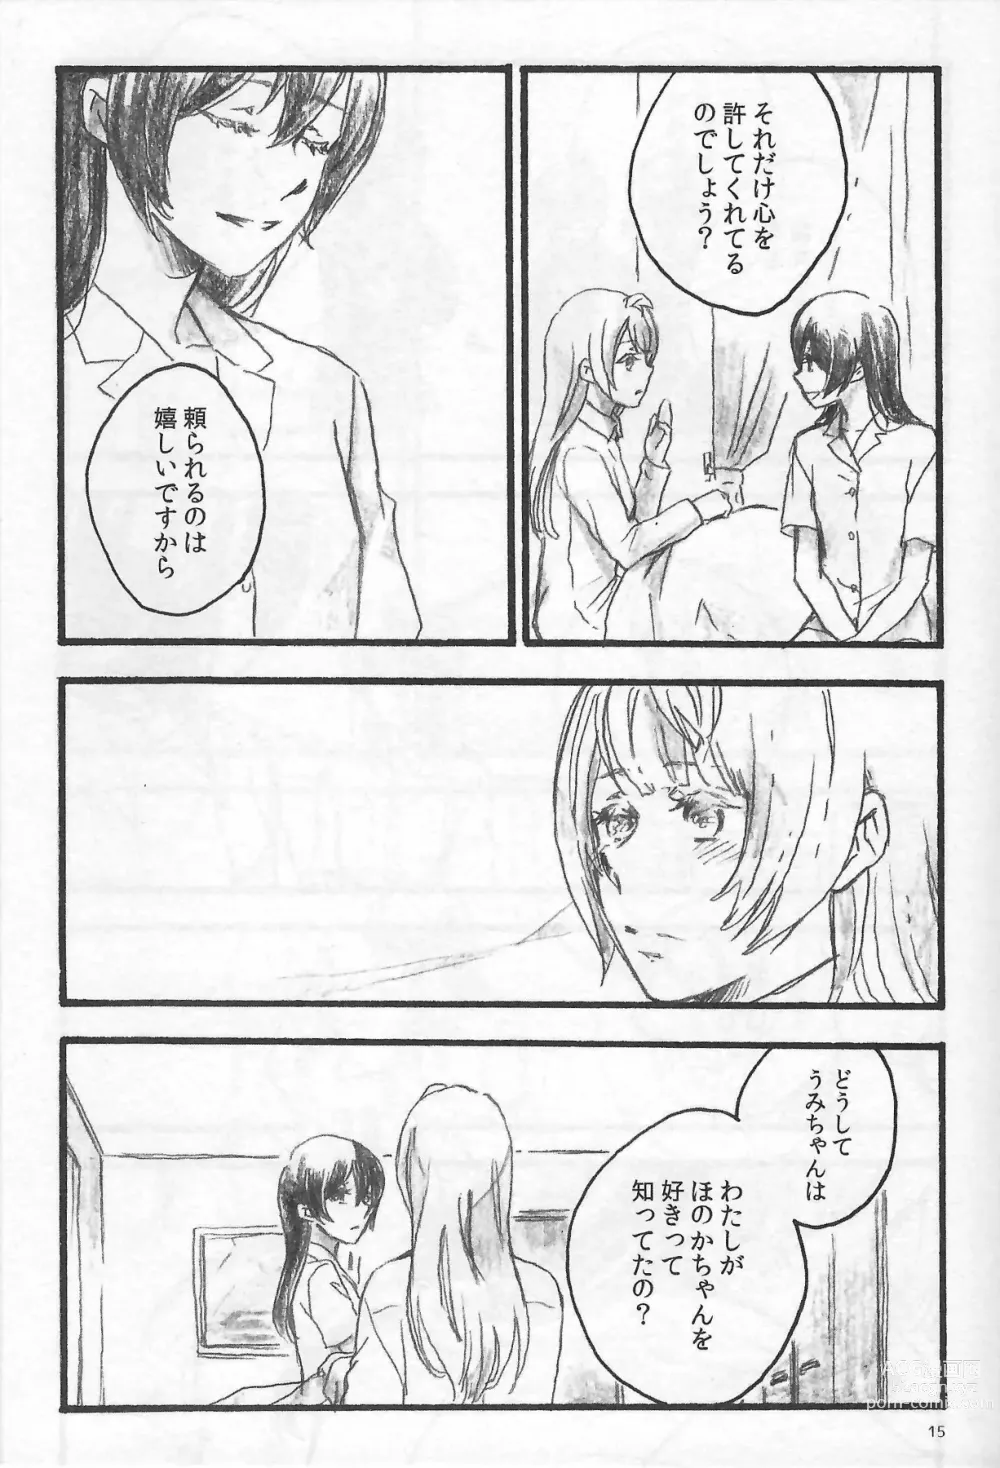 Page 14 of doujinshi Anemone coronaria